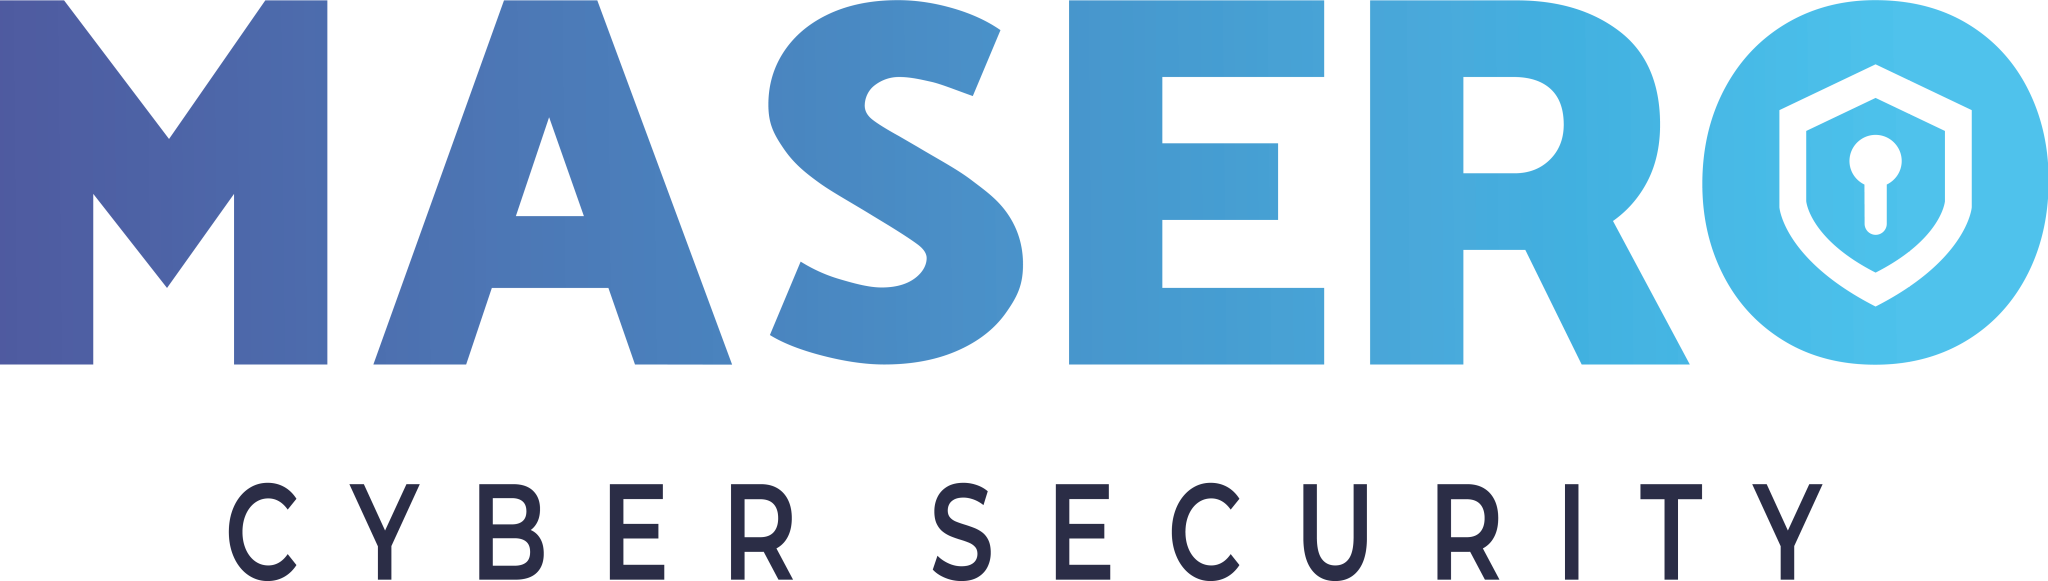 Masero Cyber Security BV